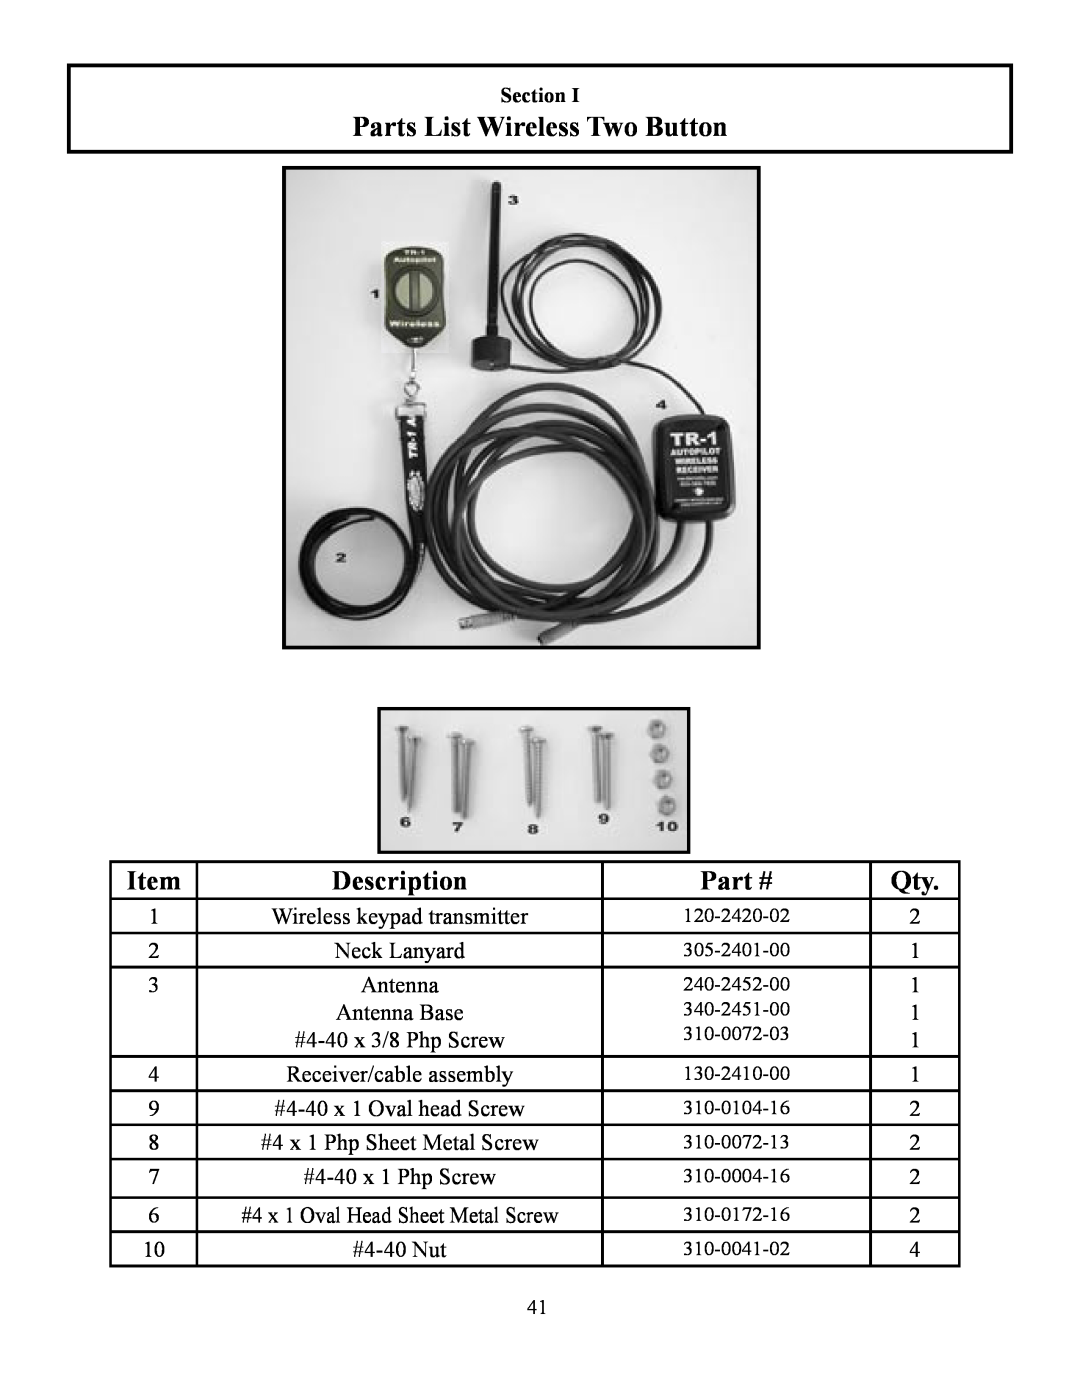 Garmin TR-1 manual Parts List Wireless Two Button, Description, Wireless keypad transmitter, Neck Lanyard, Antenna Base 